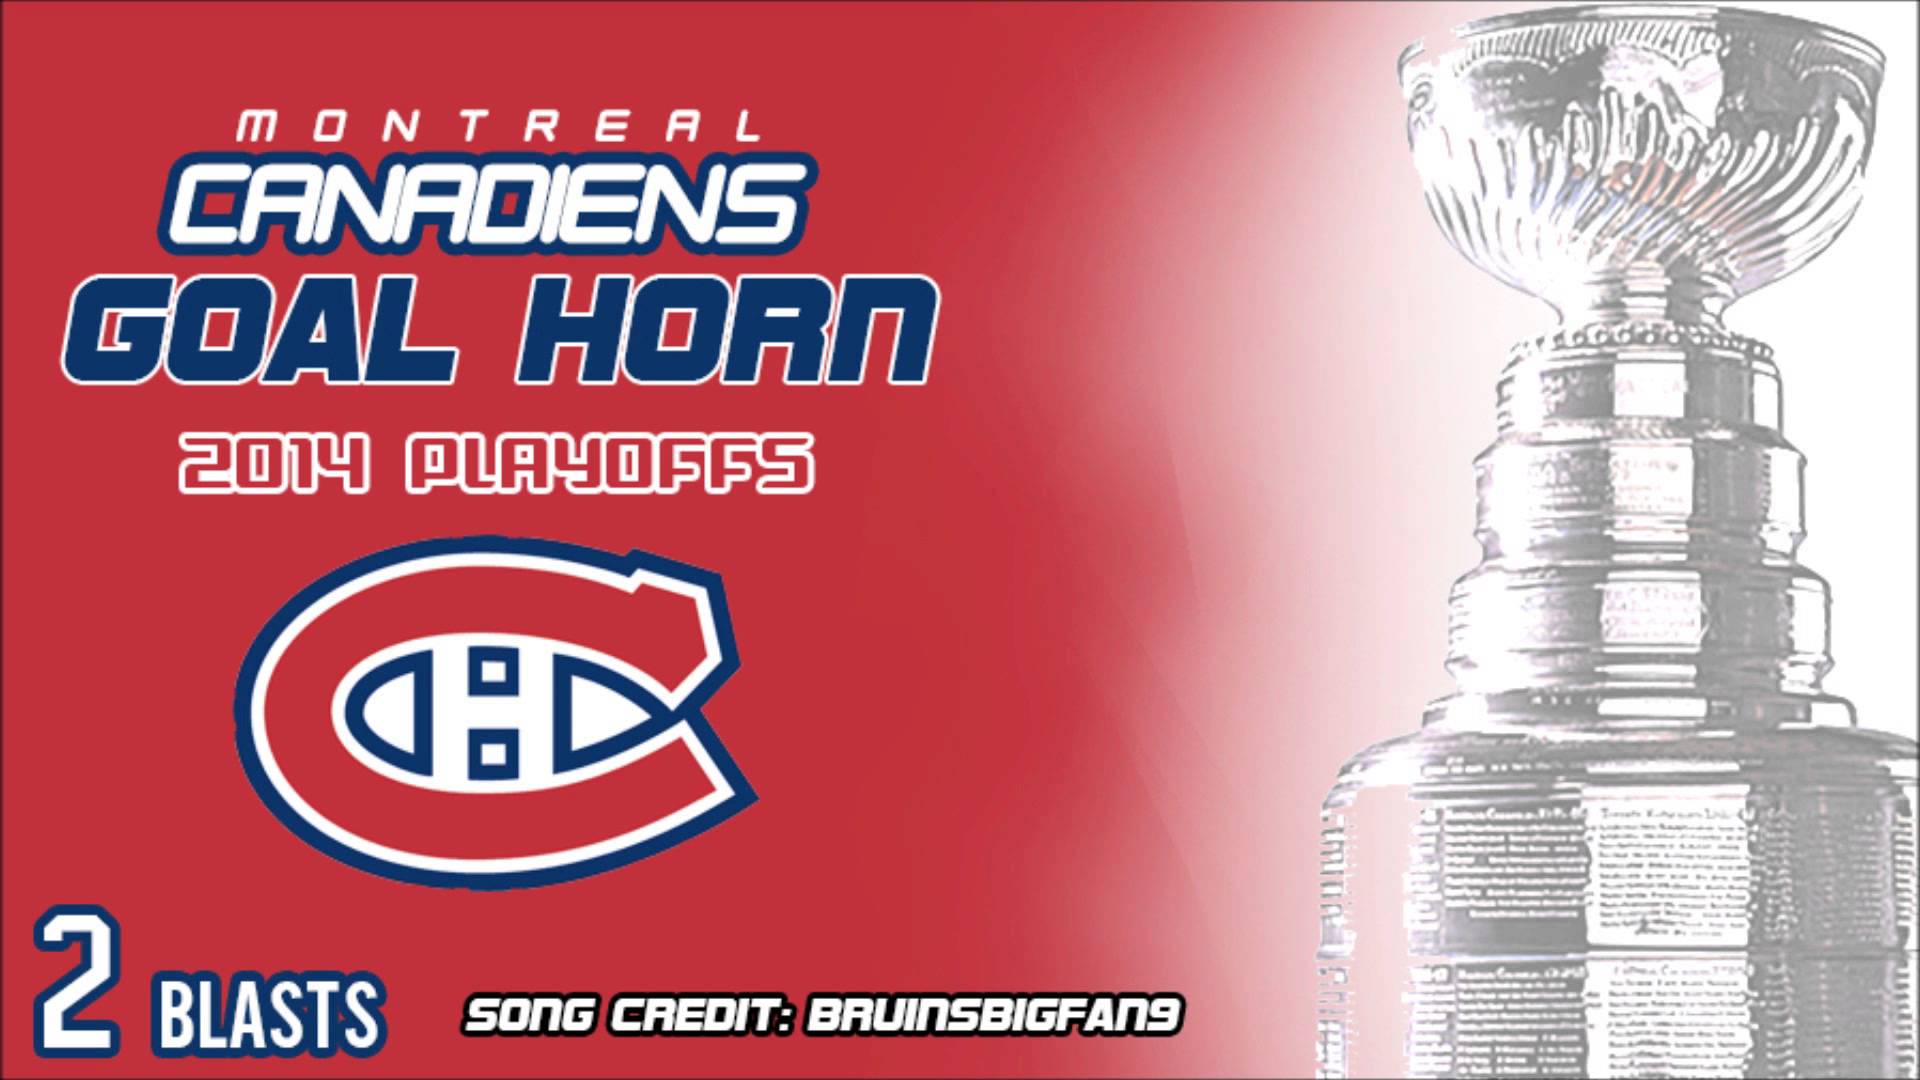 Montréal Canadiens 2014 Playoff Goal Horn (2 BLASTS) ᴴᴰ